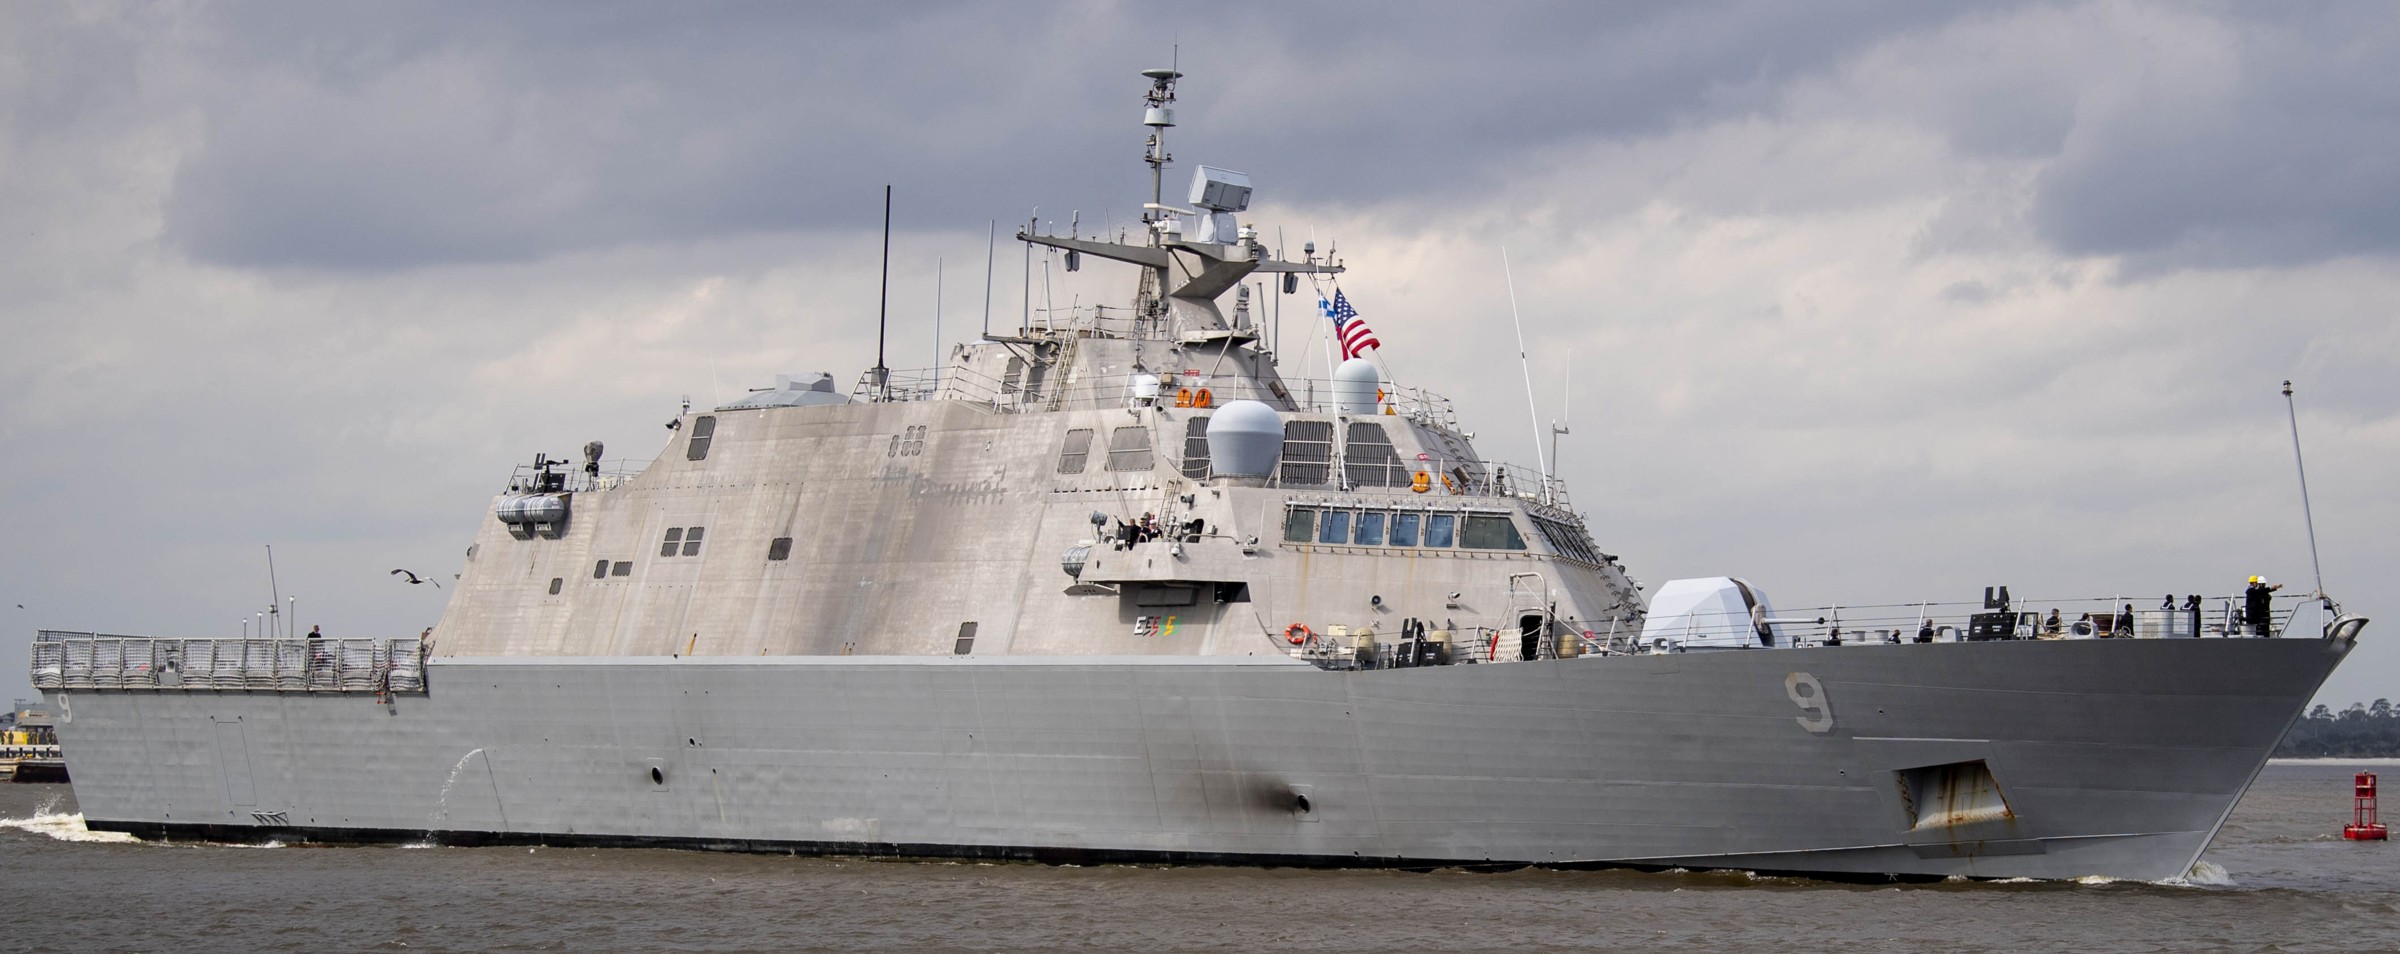 lcs-9 uss little rock freedom class littoral combat ship us navy 30